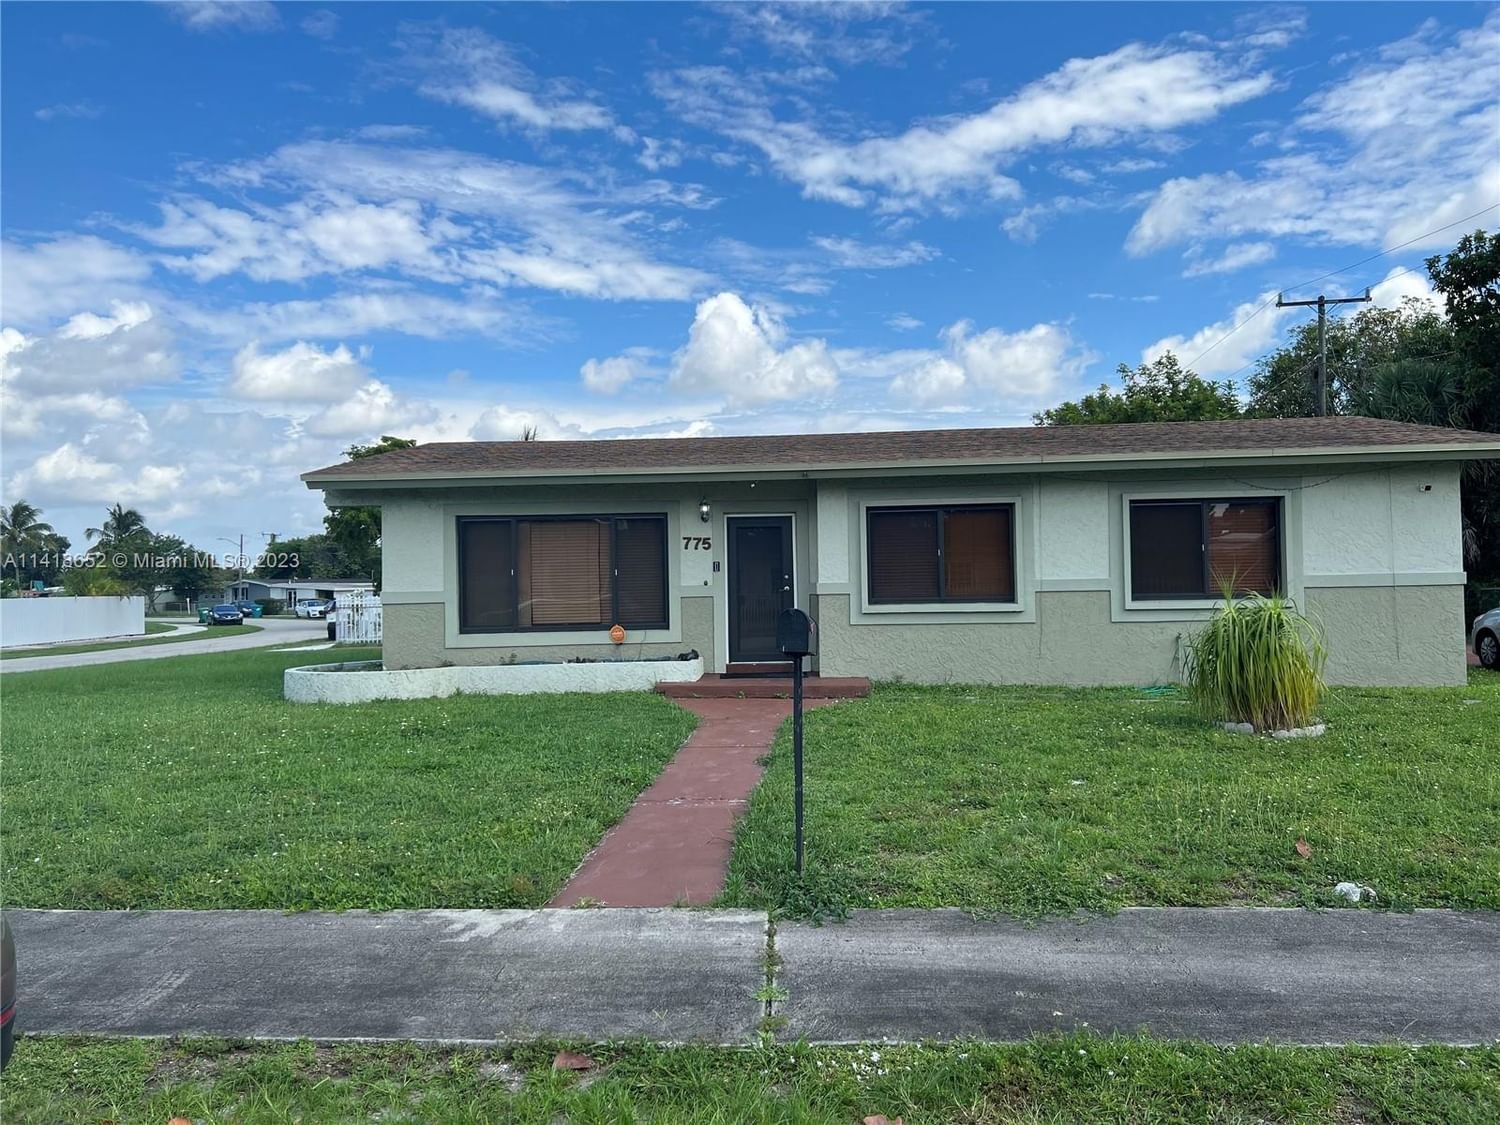 Real estate property located at 775 168th Dr, Miami-Dade County, CRAVERO CLOVERLEAF ESTATE, Miami Gardens, FL